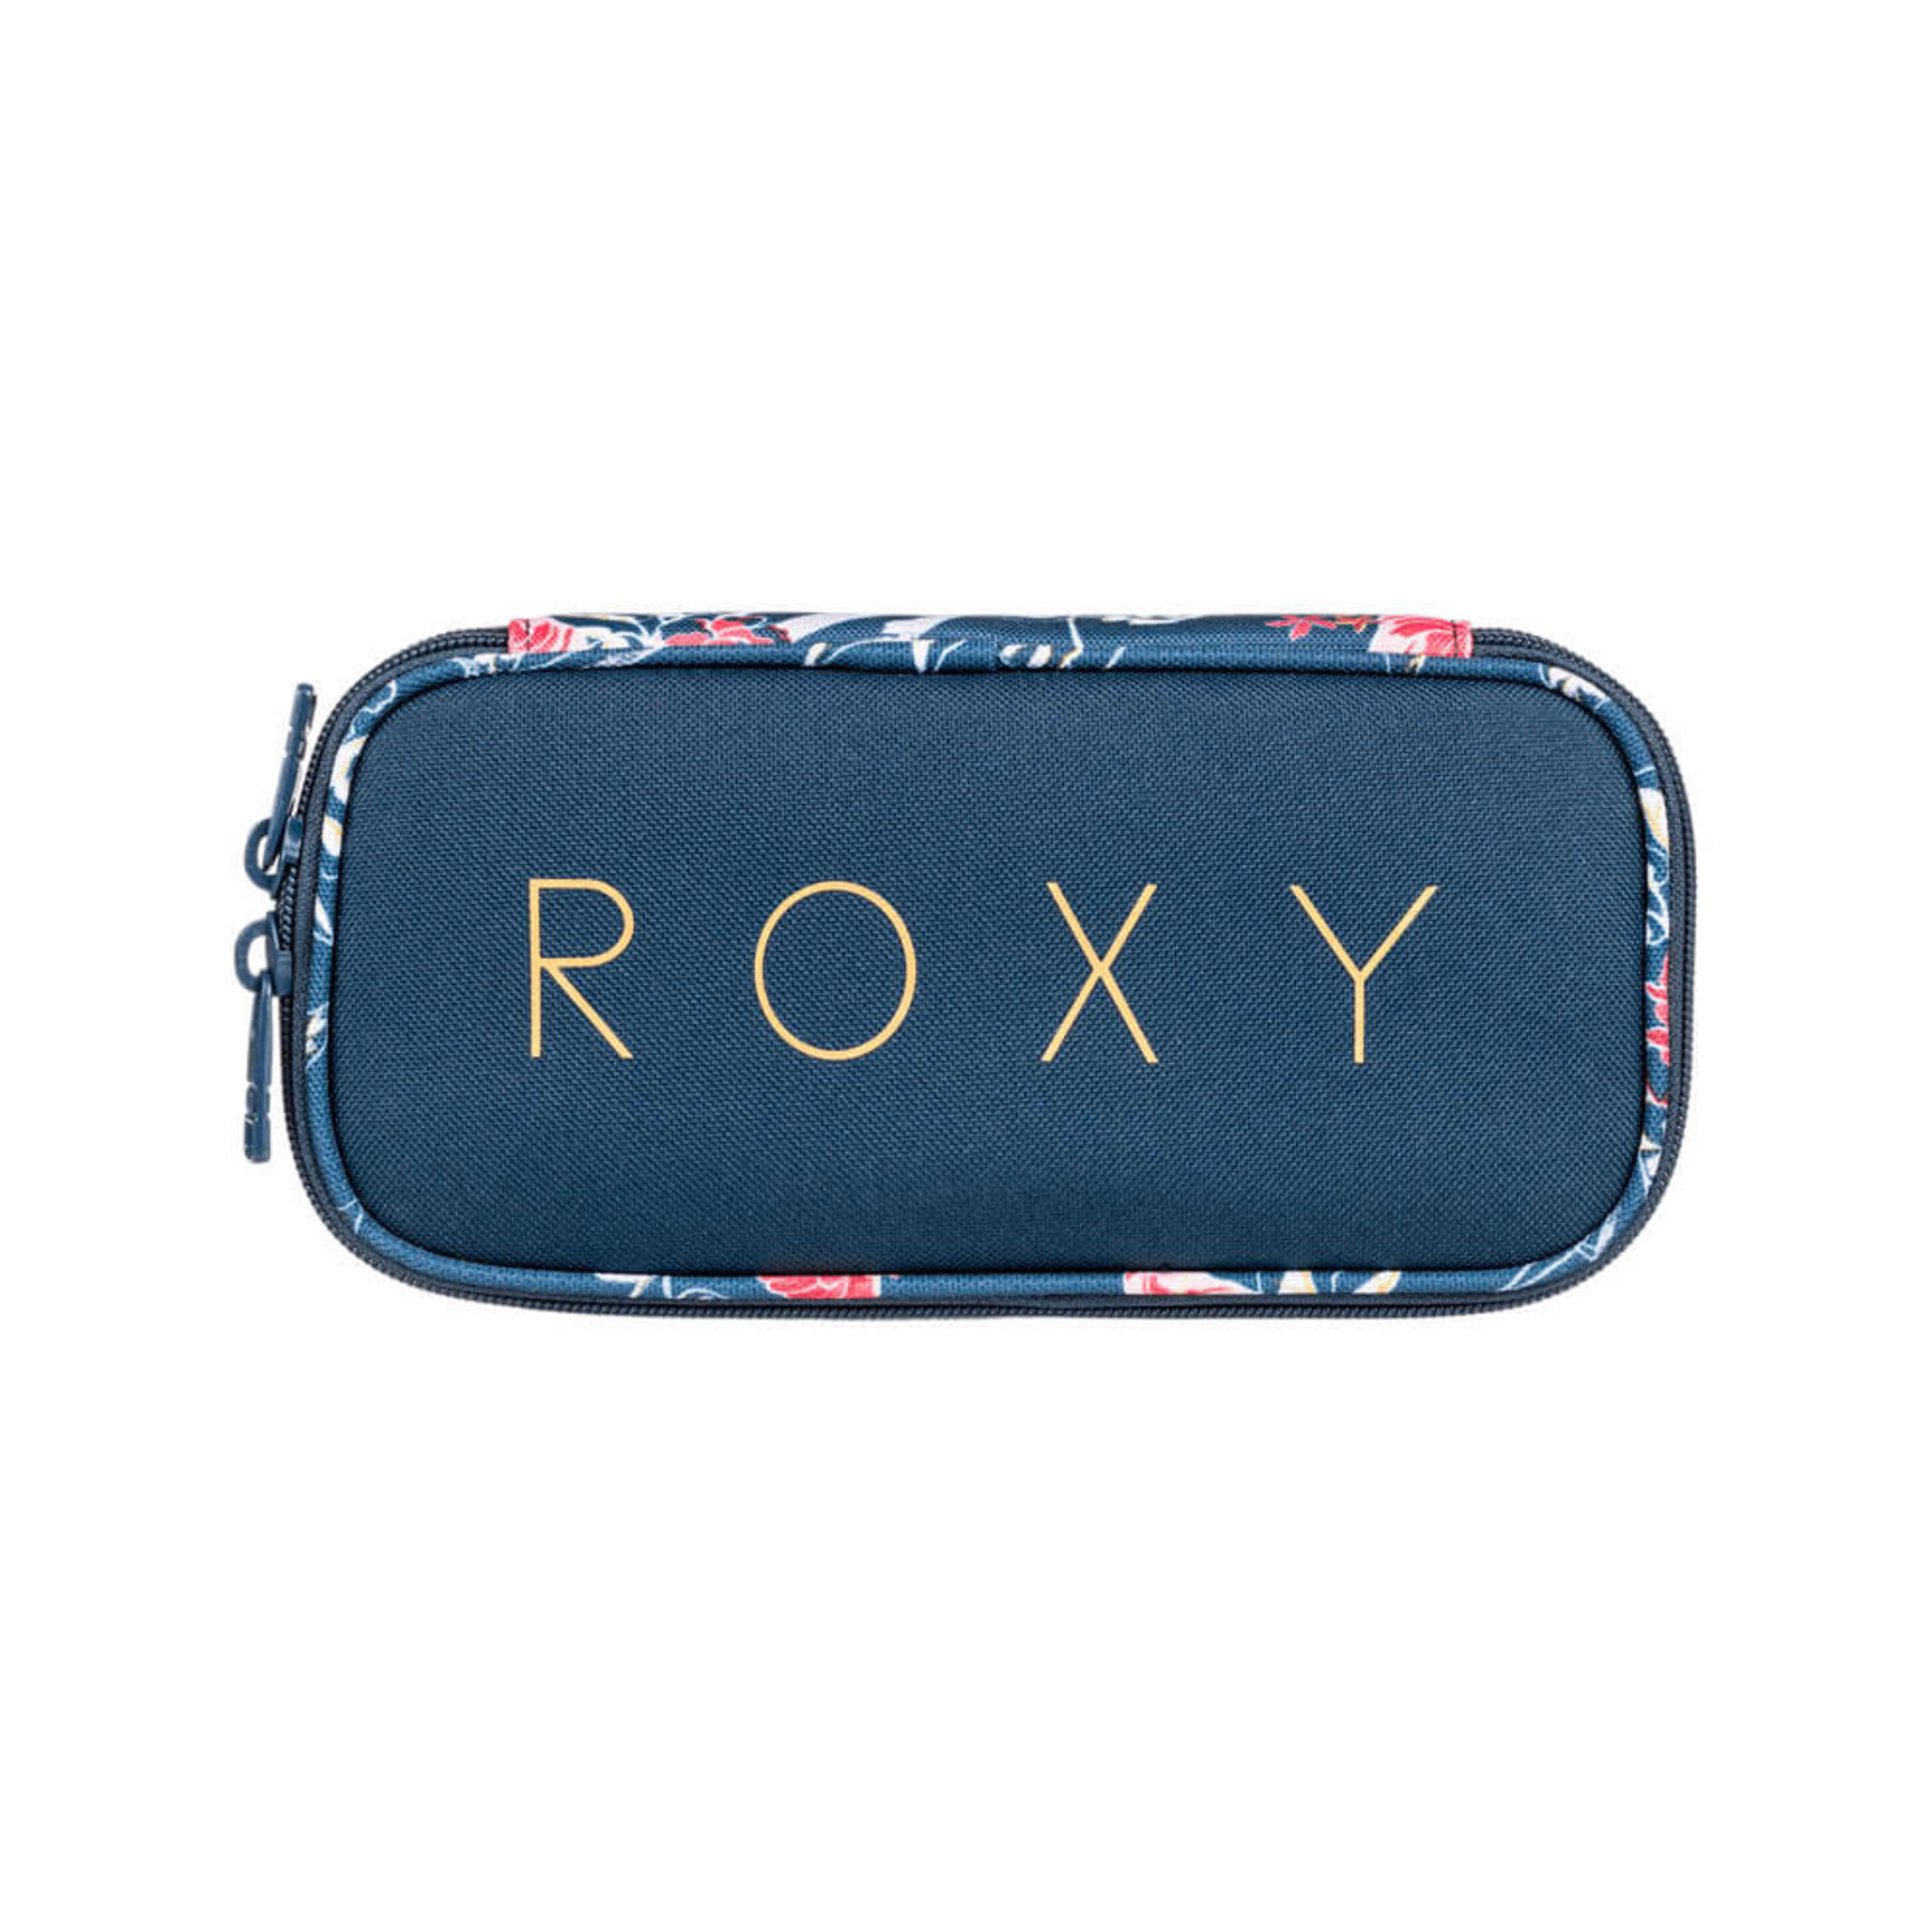 Roxy Travel Accessory- Money Belt, Blue - Multicolor  MKP